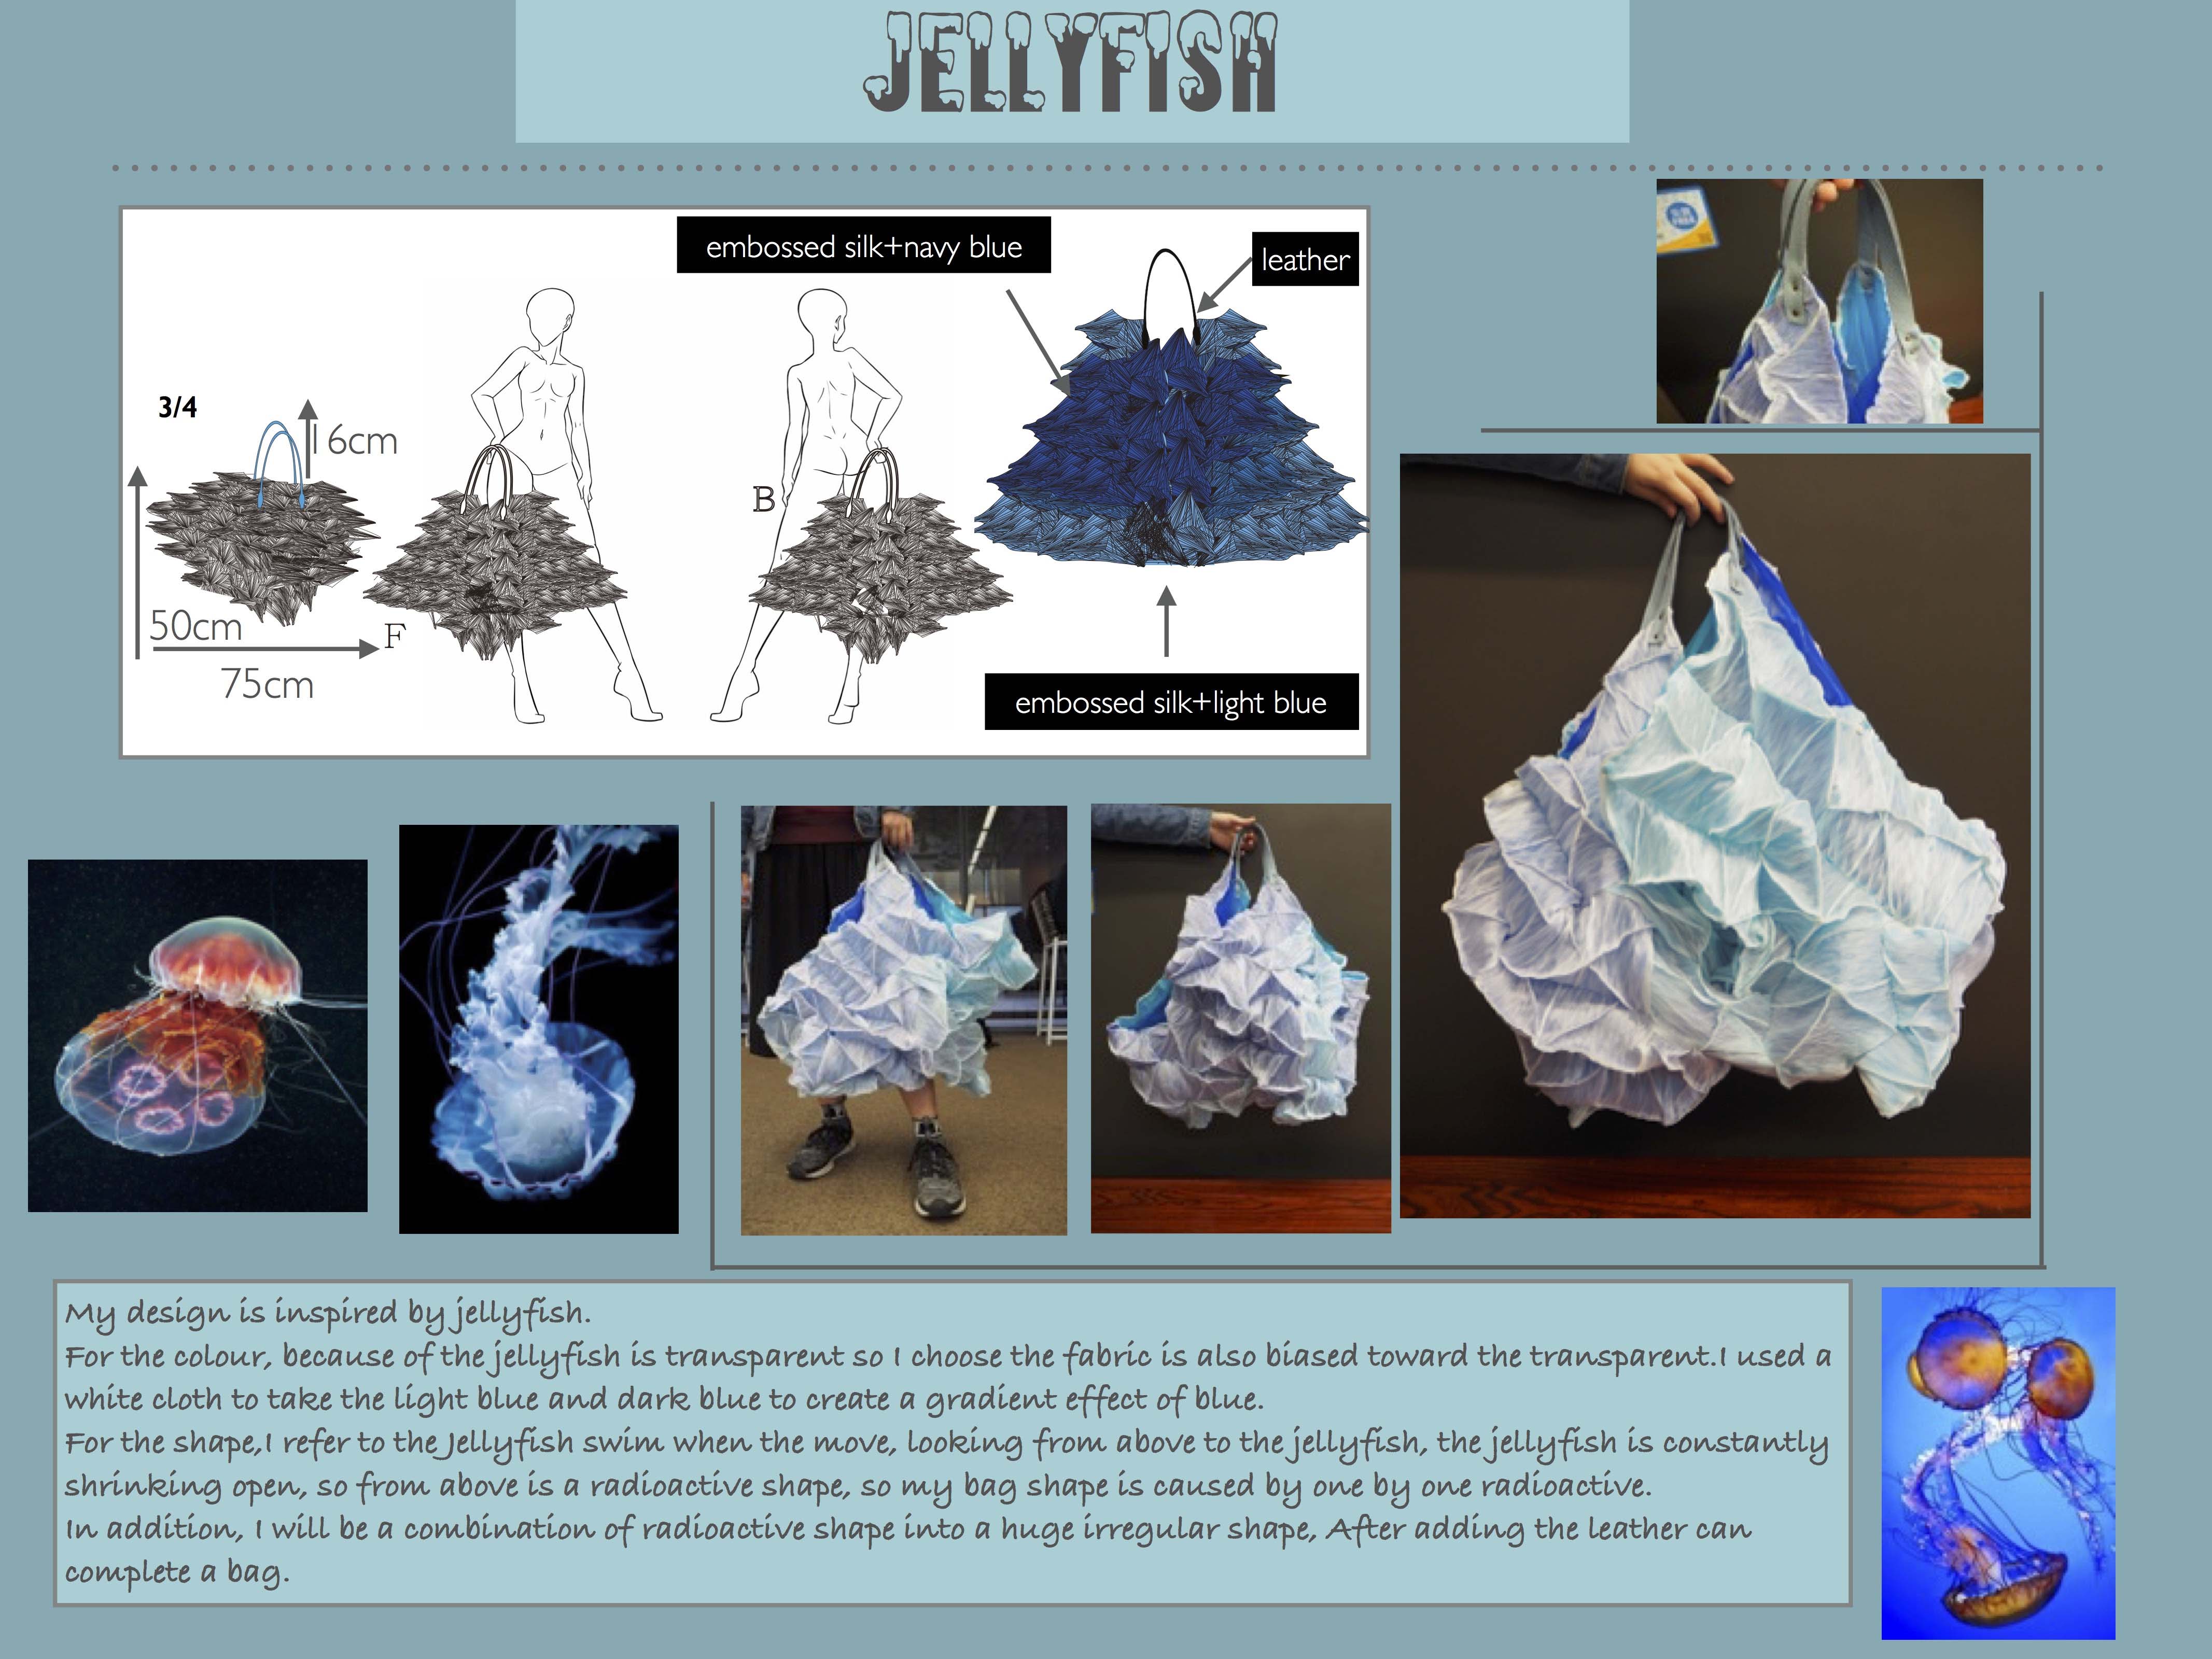 WINNER
Jellyfish
By Chan Tak Kei
